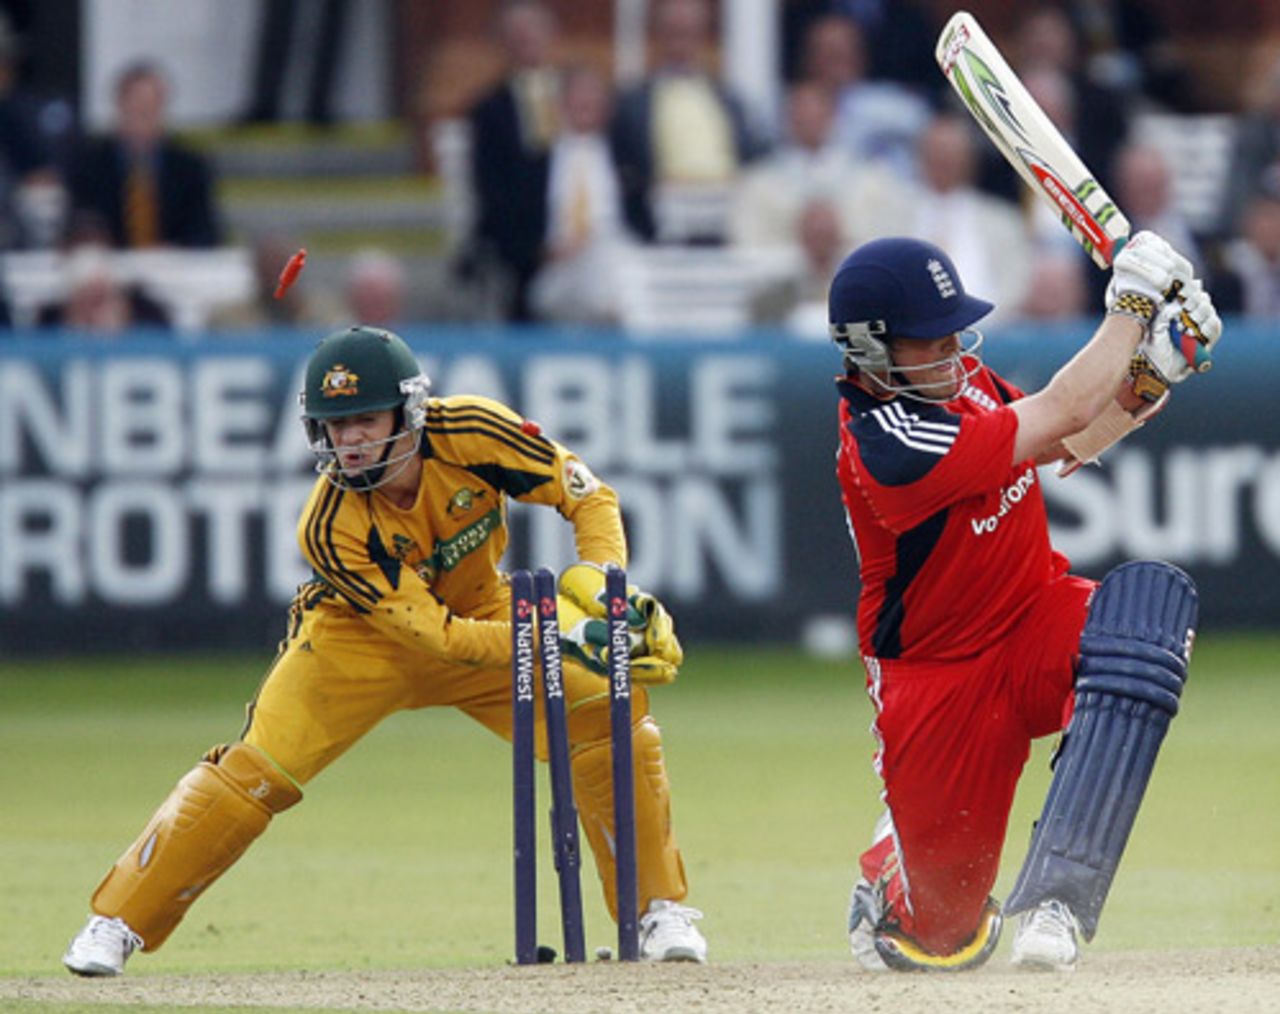 Graeme Swann swings, misses and is bowled, England v Australia, 2nd ODI, Lord's, September 6, 2009